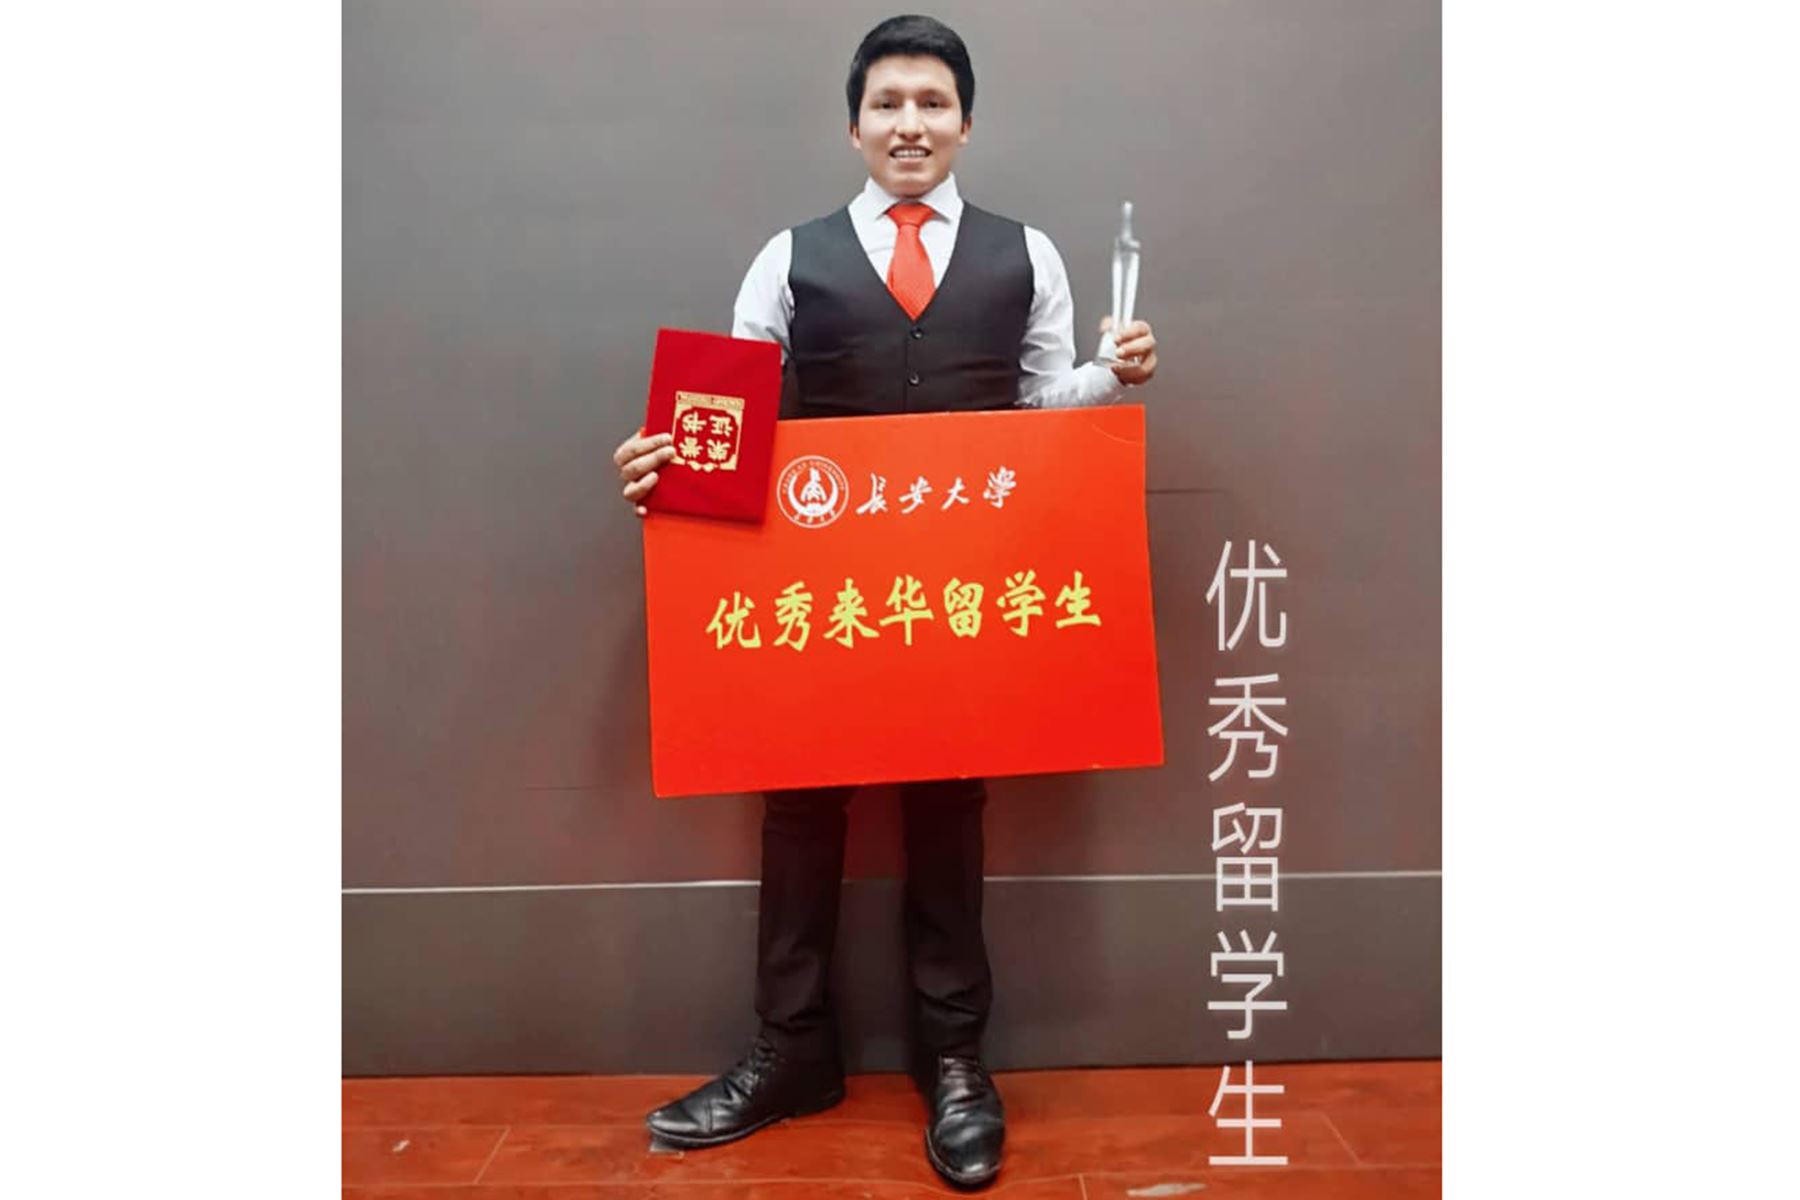 La Universidad de Chang´an de China reconoció al joven Jemuel Zarabia Hurtado, talento de Apurímac que ganó la Beca de Reciprocidad Perú-China para Estudiantes Peruanos. Foto: Pronabec